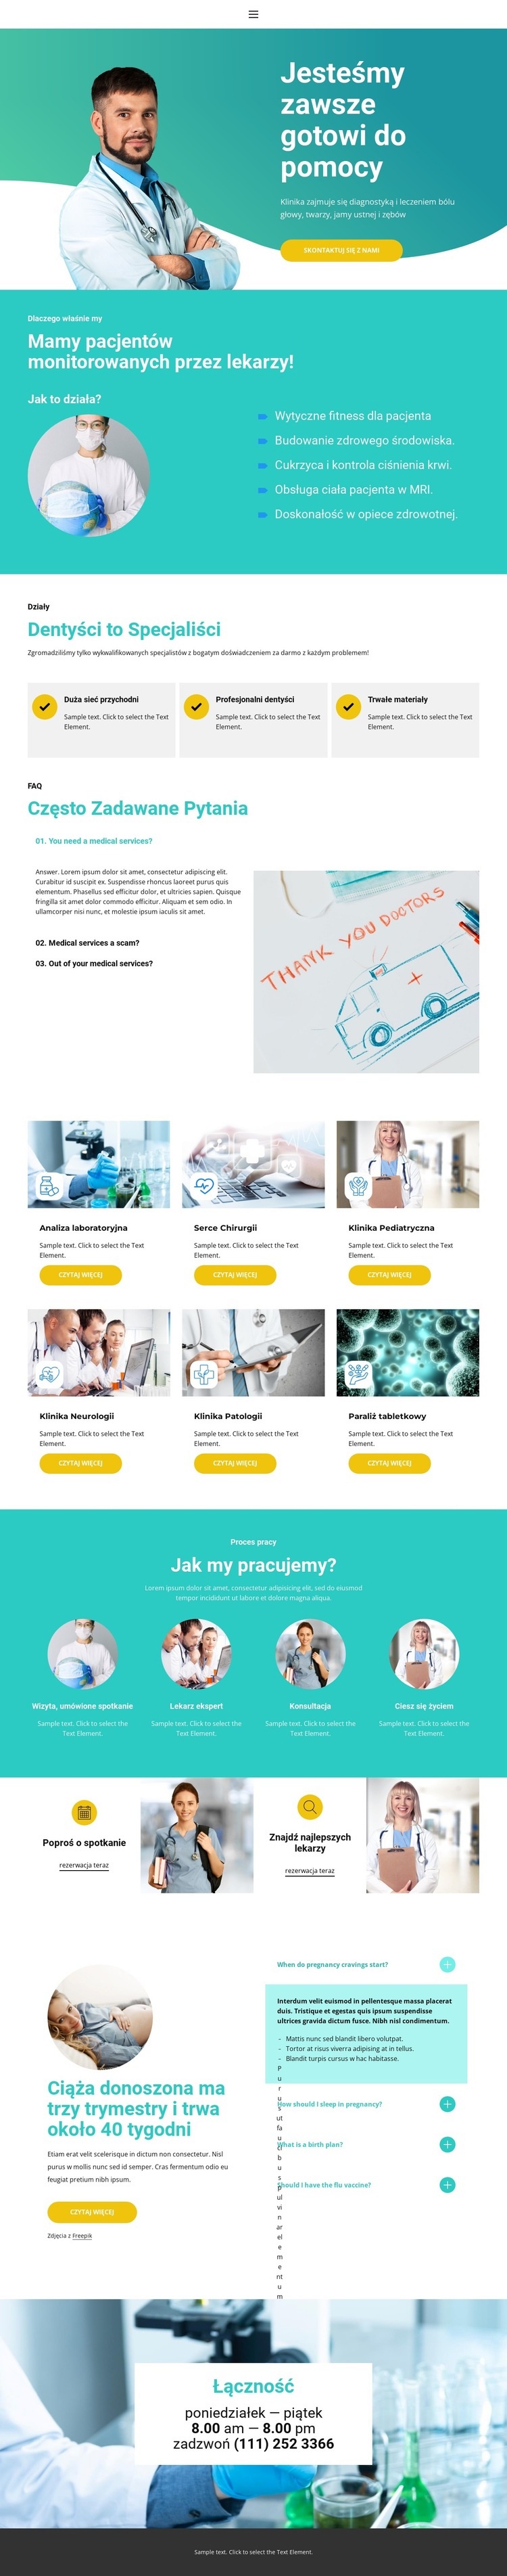 Nowe centrum medycyny Szablon HTML5